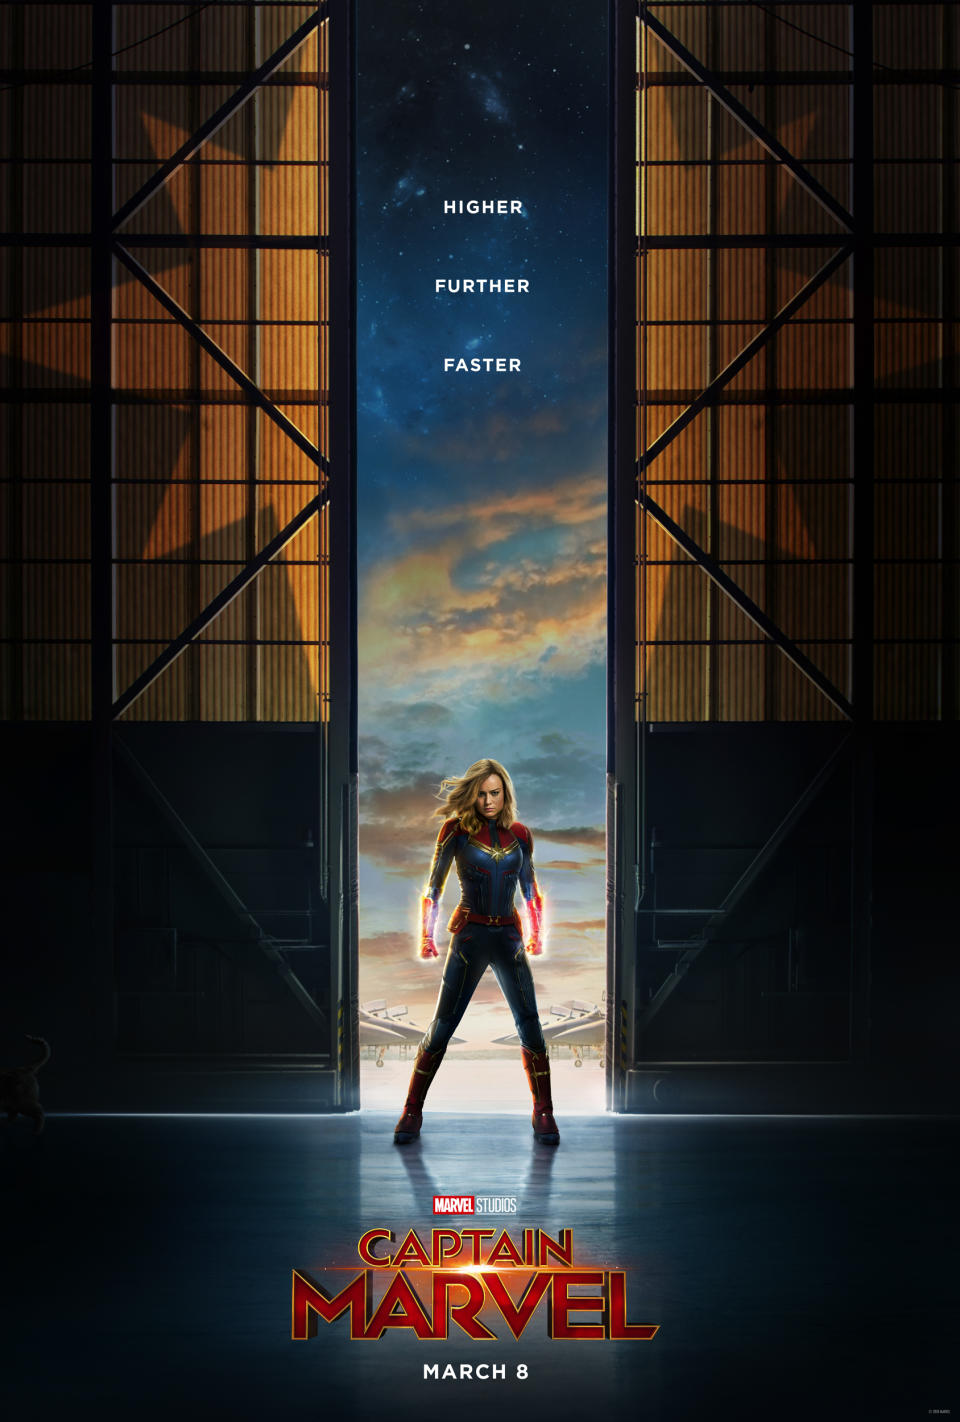 Captain Marvel poster. (Image: Walt Disney Studios)